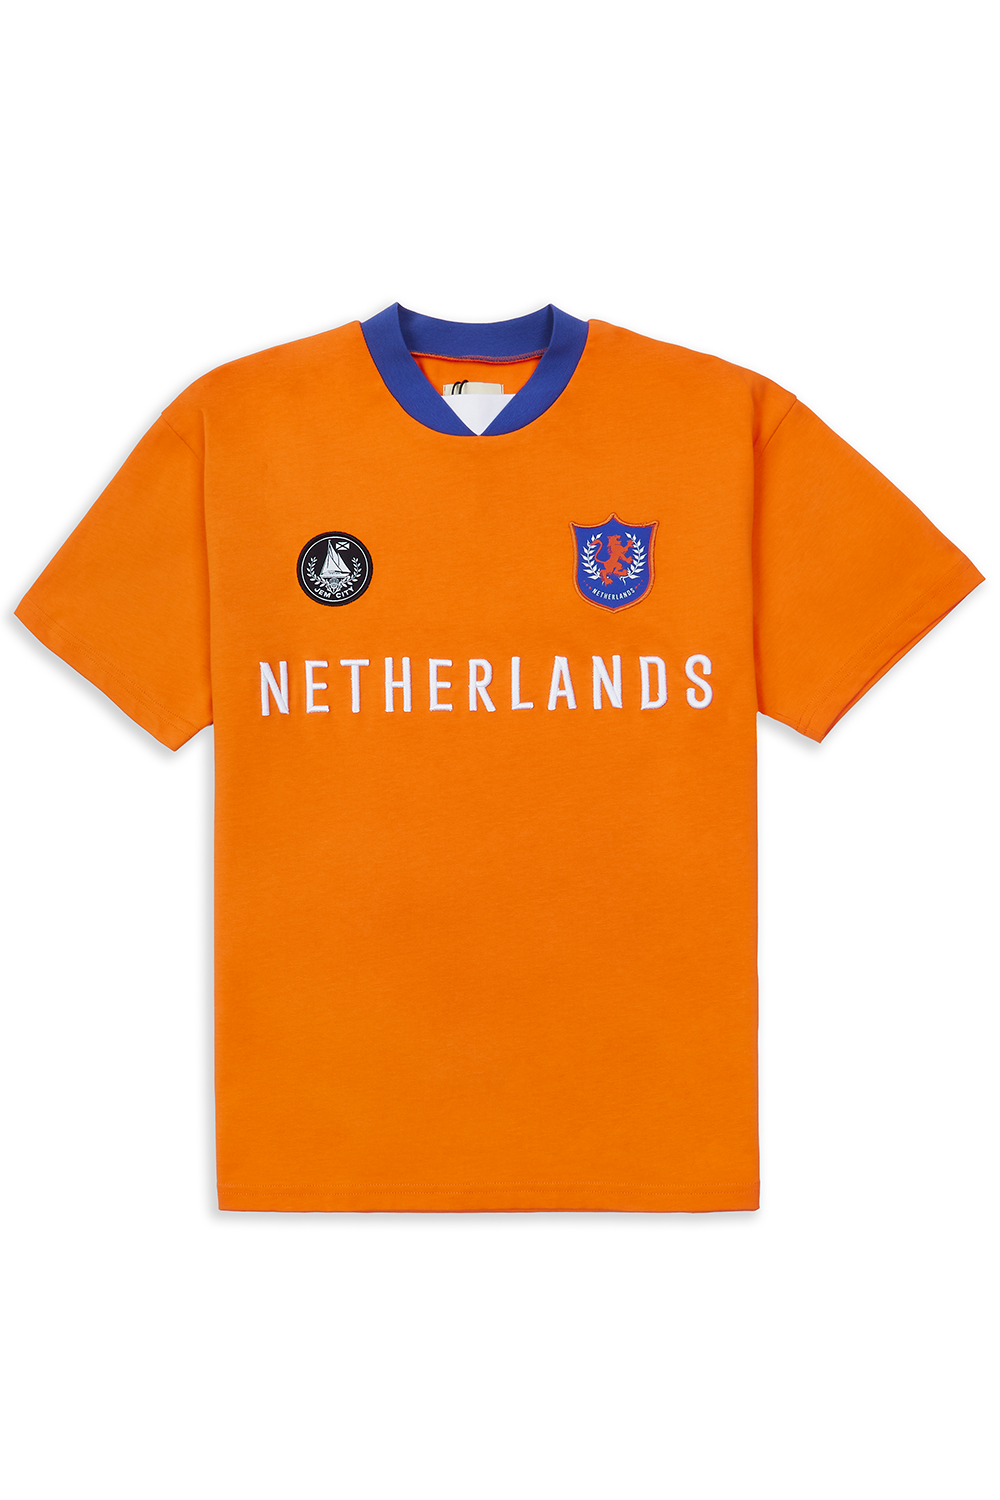 Netherlands Euros Inspired T-Shirt